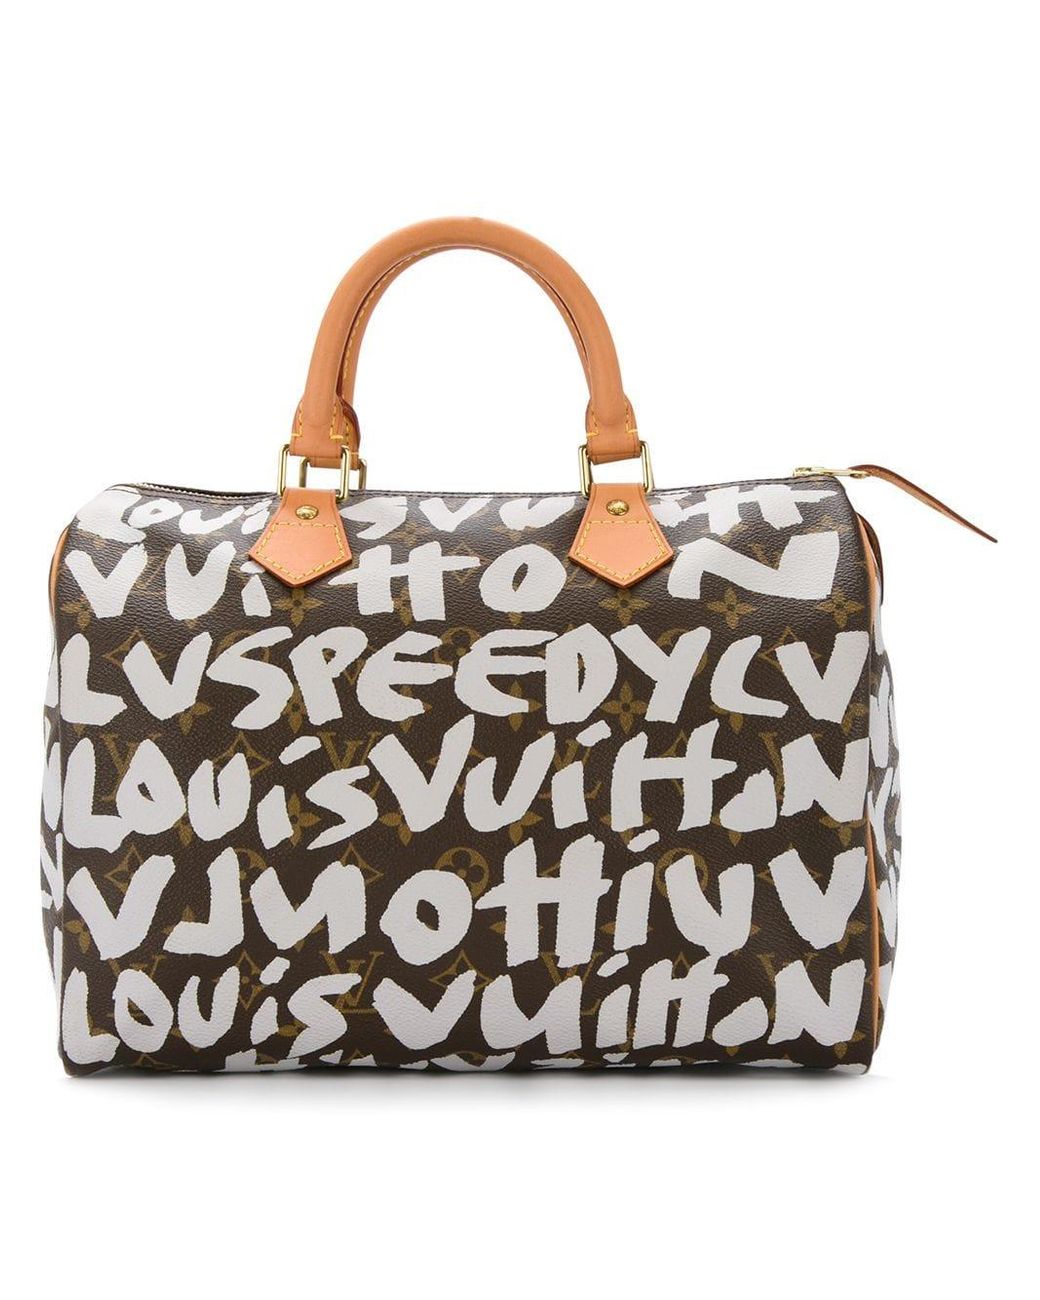 Louis Vuitton X Stephen Sprouse Limited Edition Graffiti Pochette Bag   Luxury GoRound